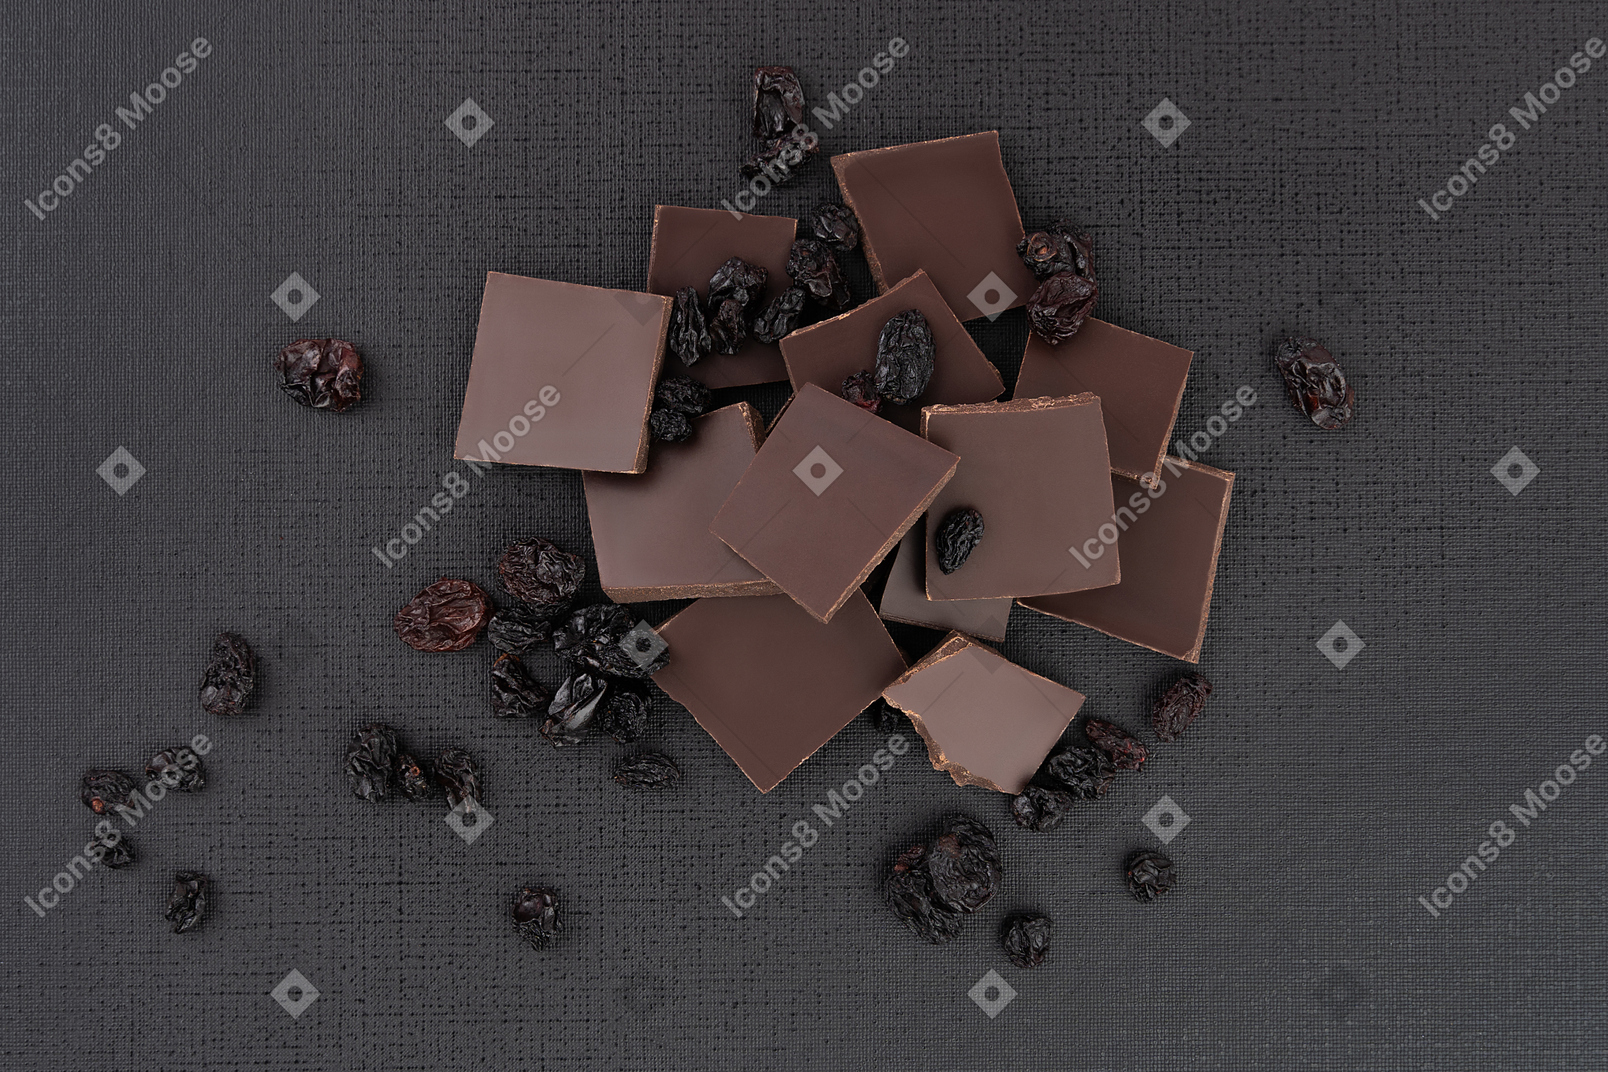 Crashed chocolate with raisins on the black